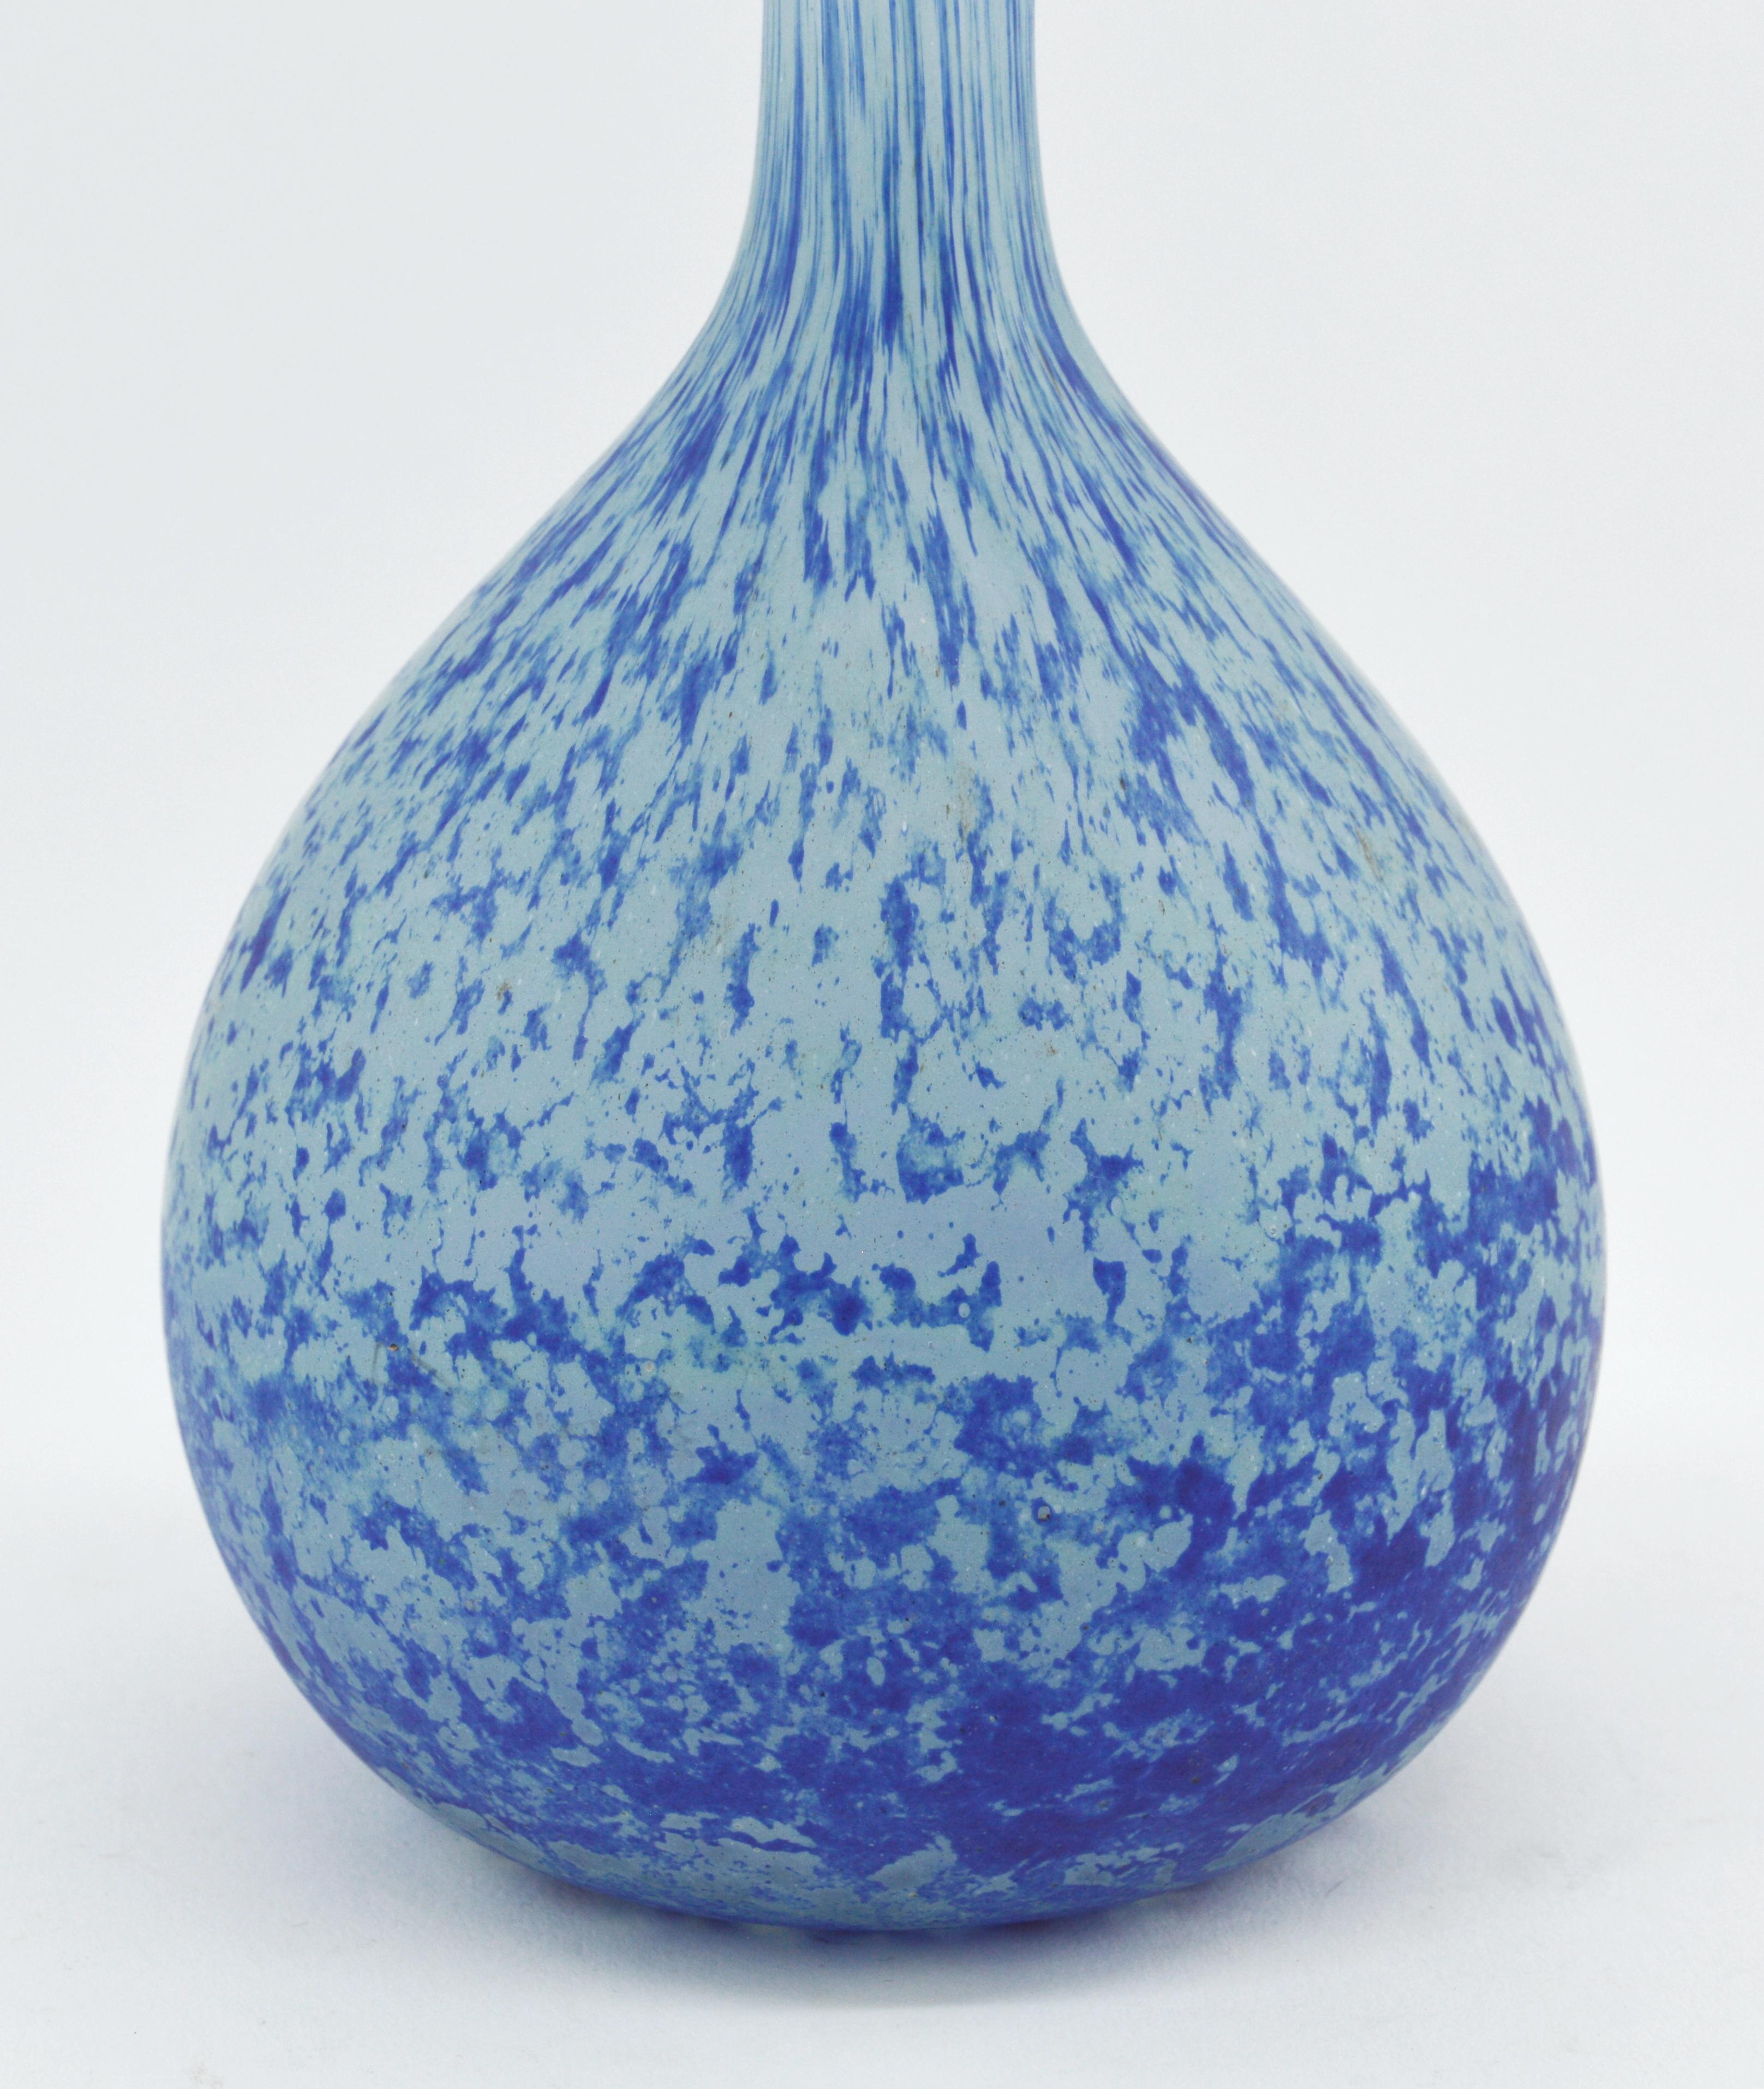 French Art Deco berluze vase by Andre Delatte (Jarville, near Nancy), France, late 1920s. Mottled glass. Signed 